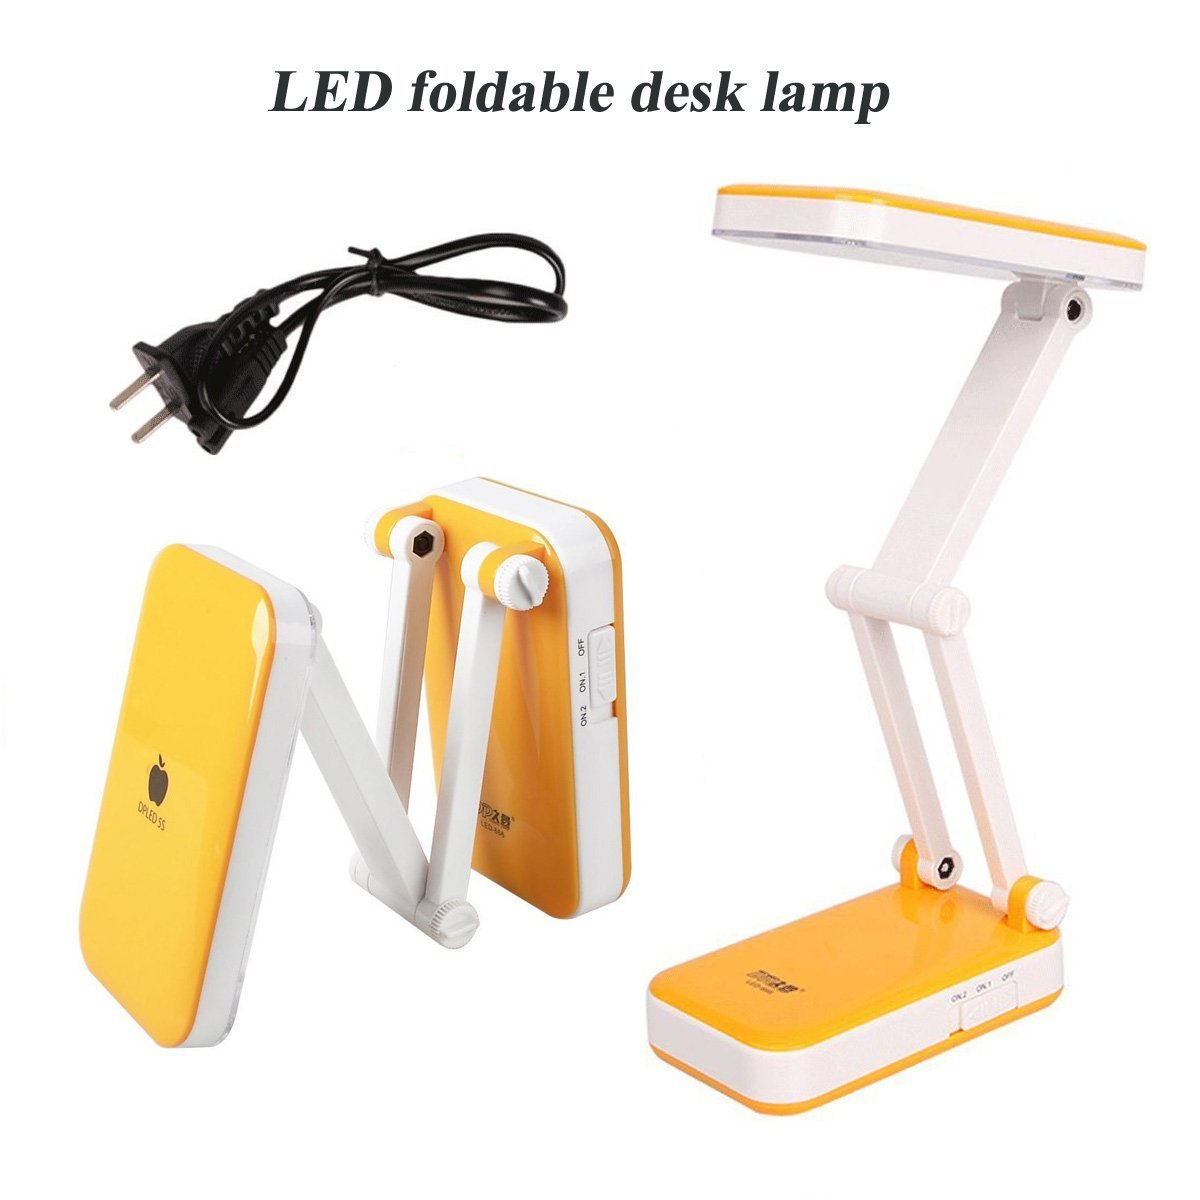 Wholesale Lots 10 Pcslot Folding Led Desk Lamp 24 Led intended for size 1200 X 1200